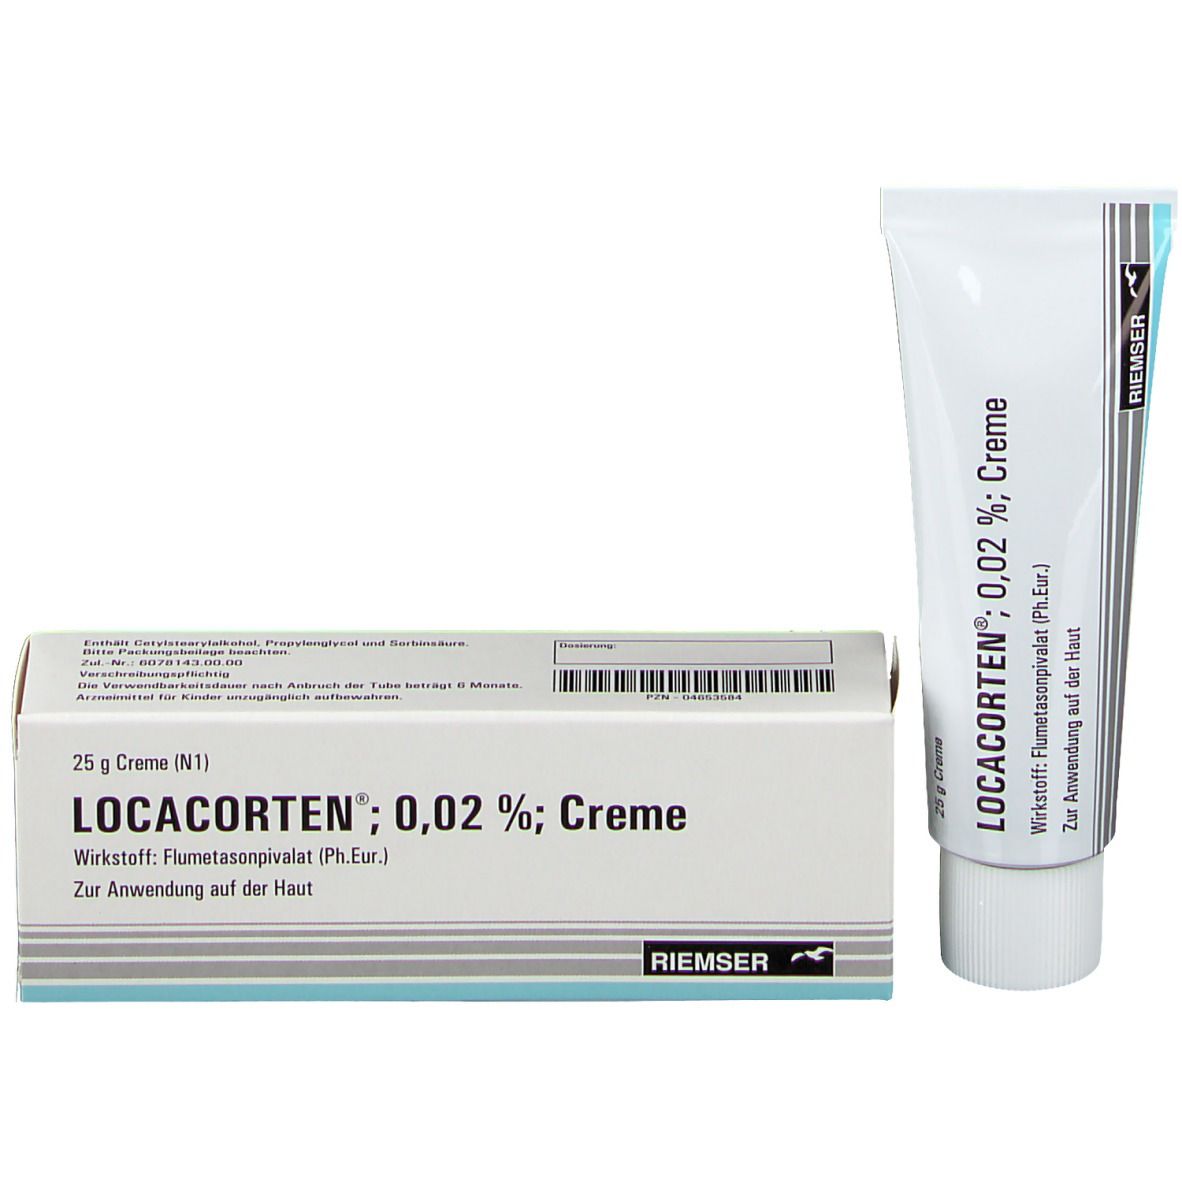 LOCACORTEN® 0,02 % Creme